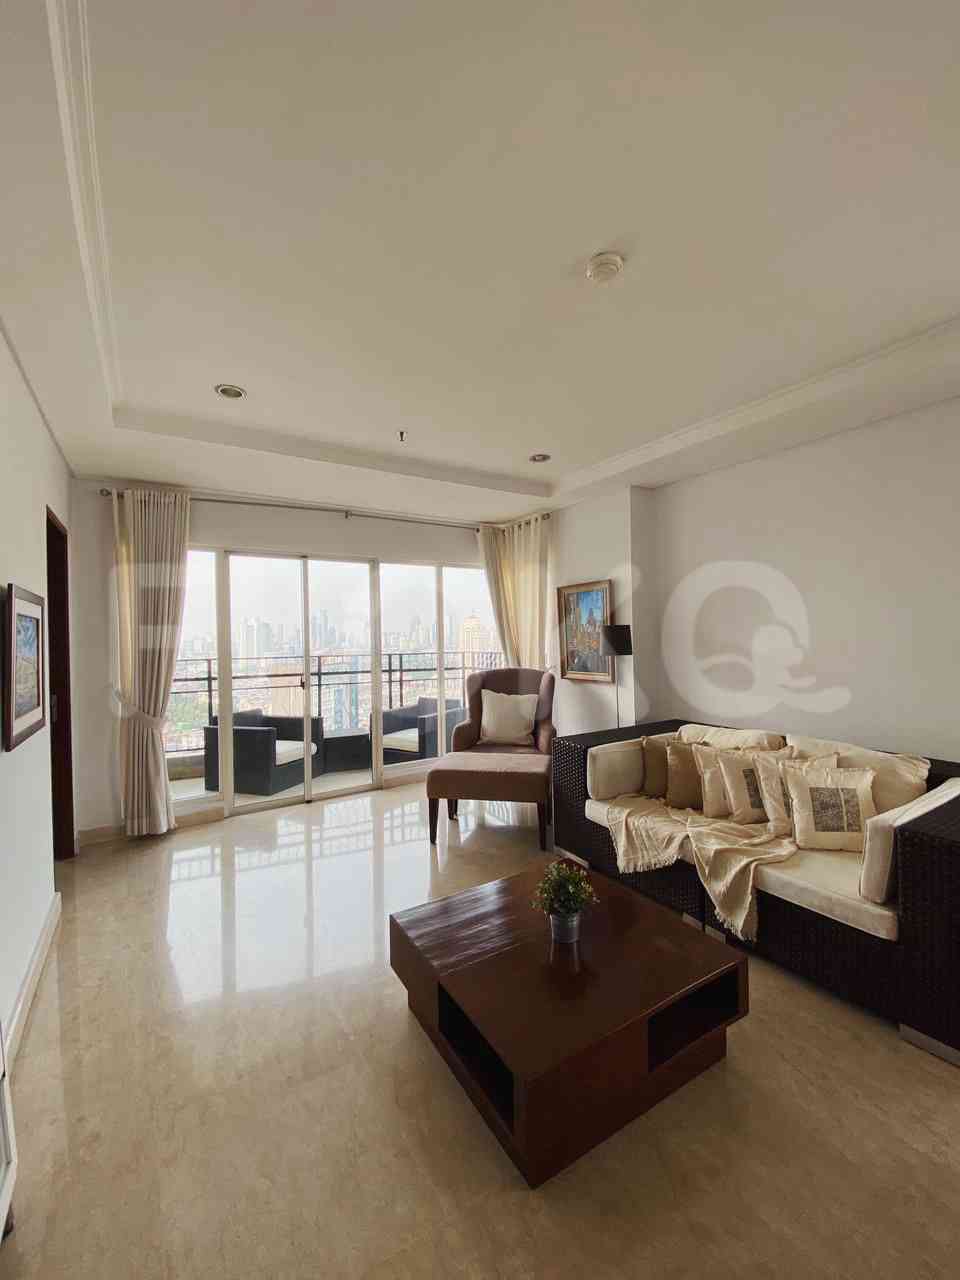 4 Bedroom on 26th Floor for Rent in Permata Hijau Suites Apartment - fpeb05 1